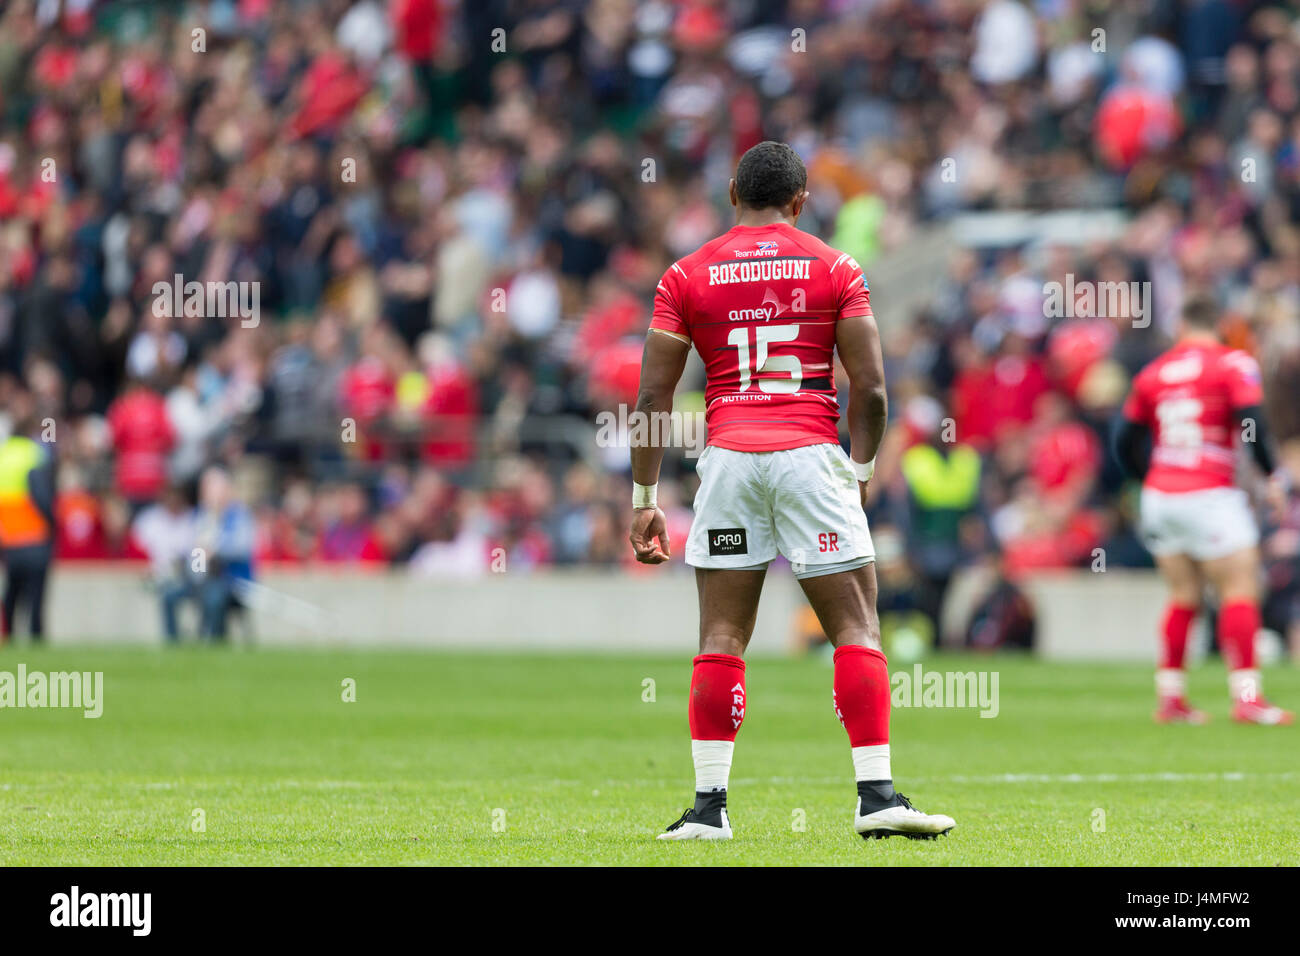 Joueur de rugby de l'Armée de terre Rokoduguni Semesa jouer à Twickenham en 2017 Banque D'Images